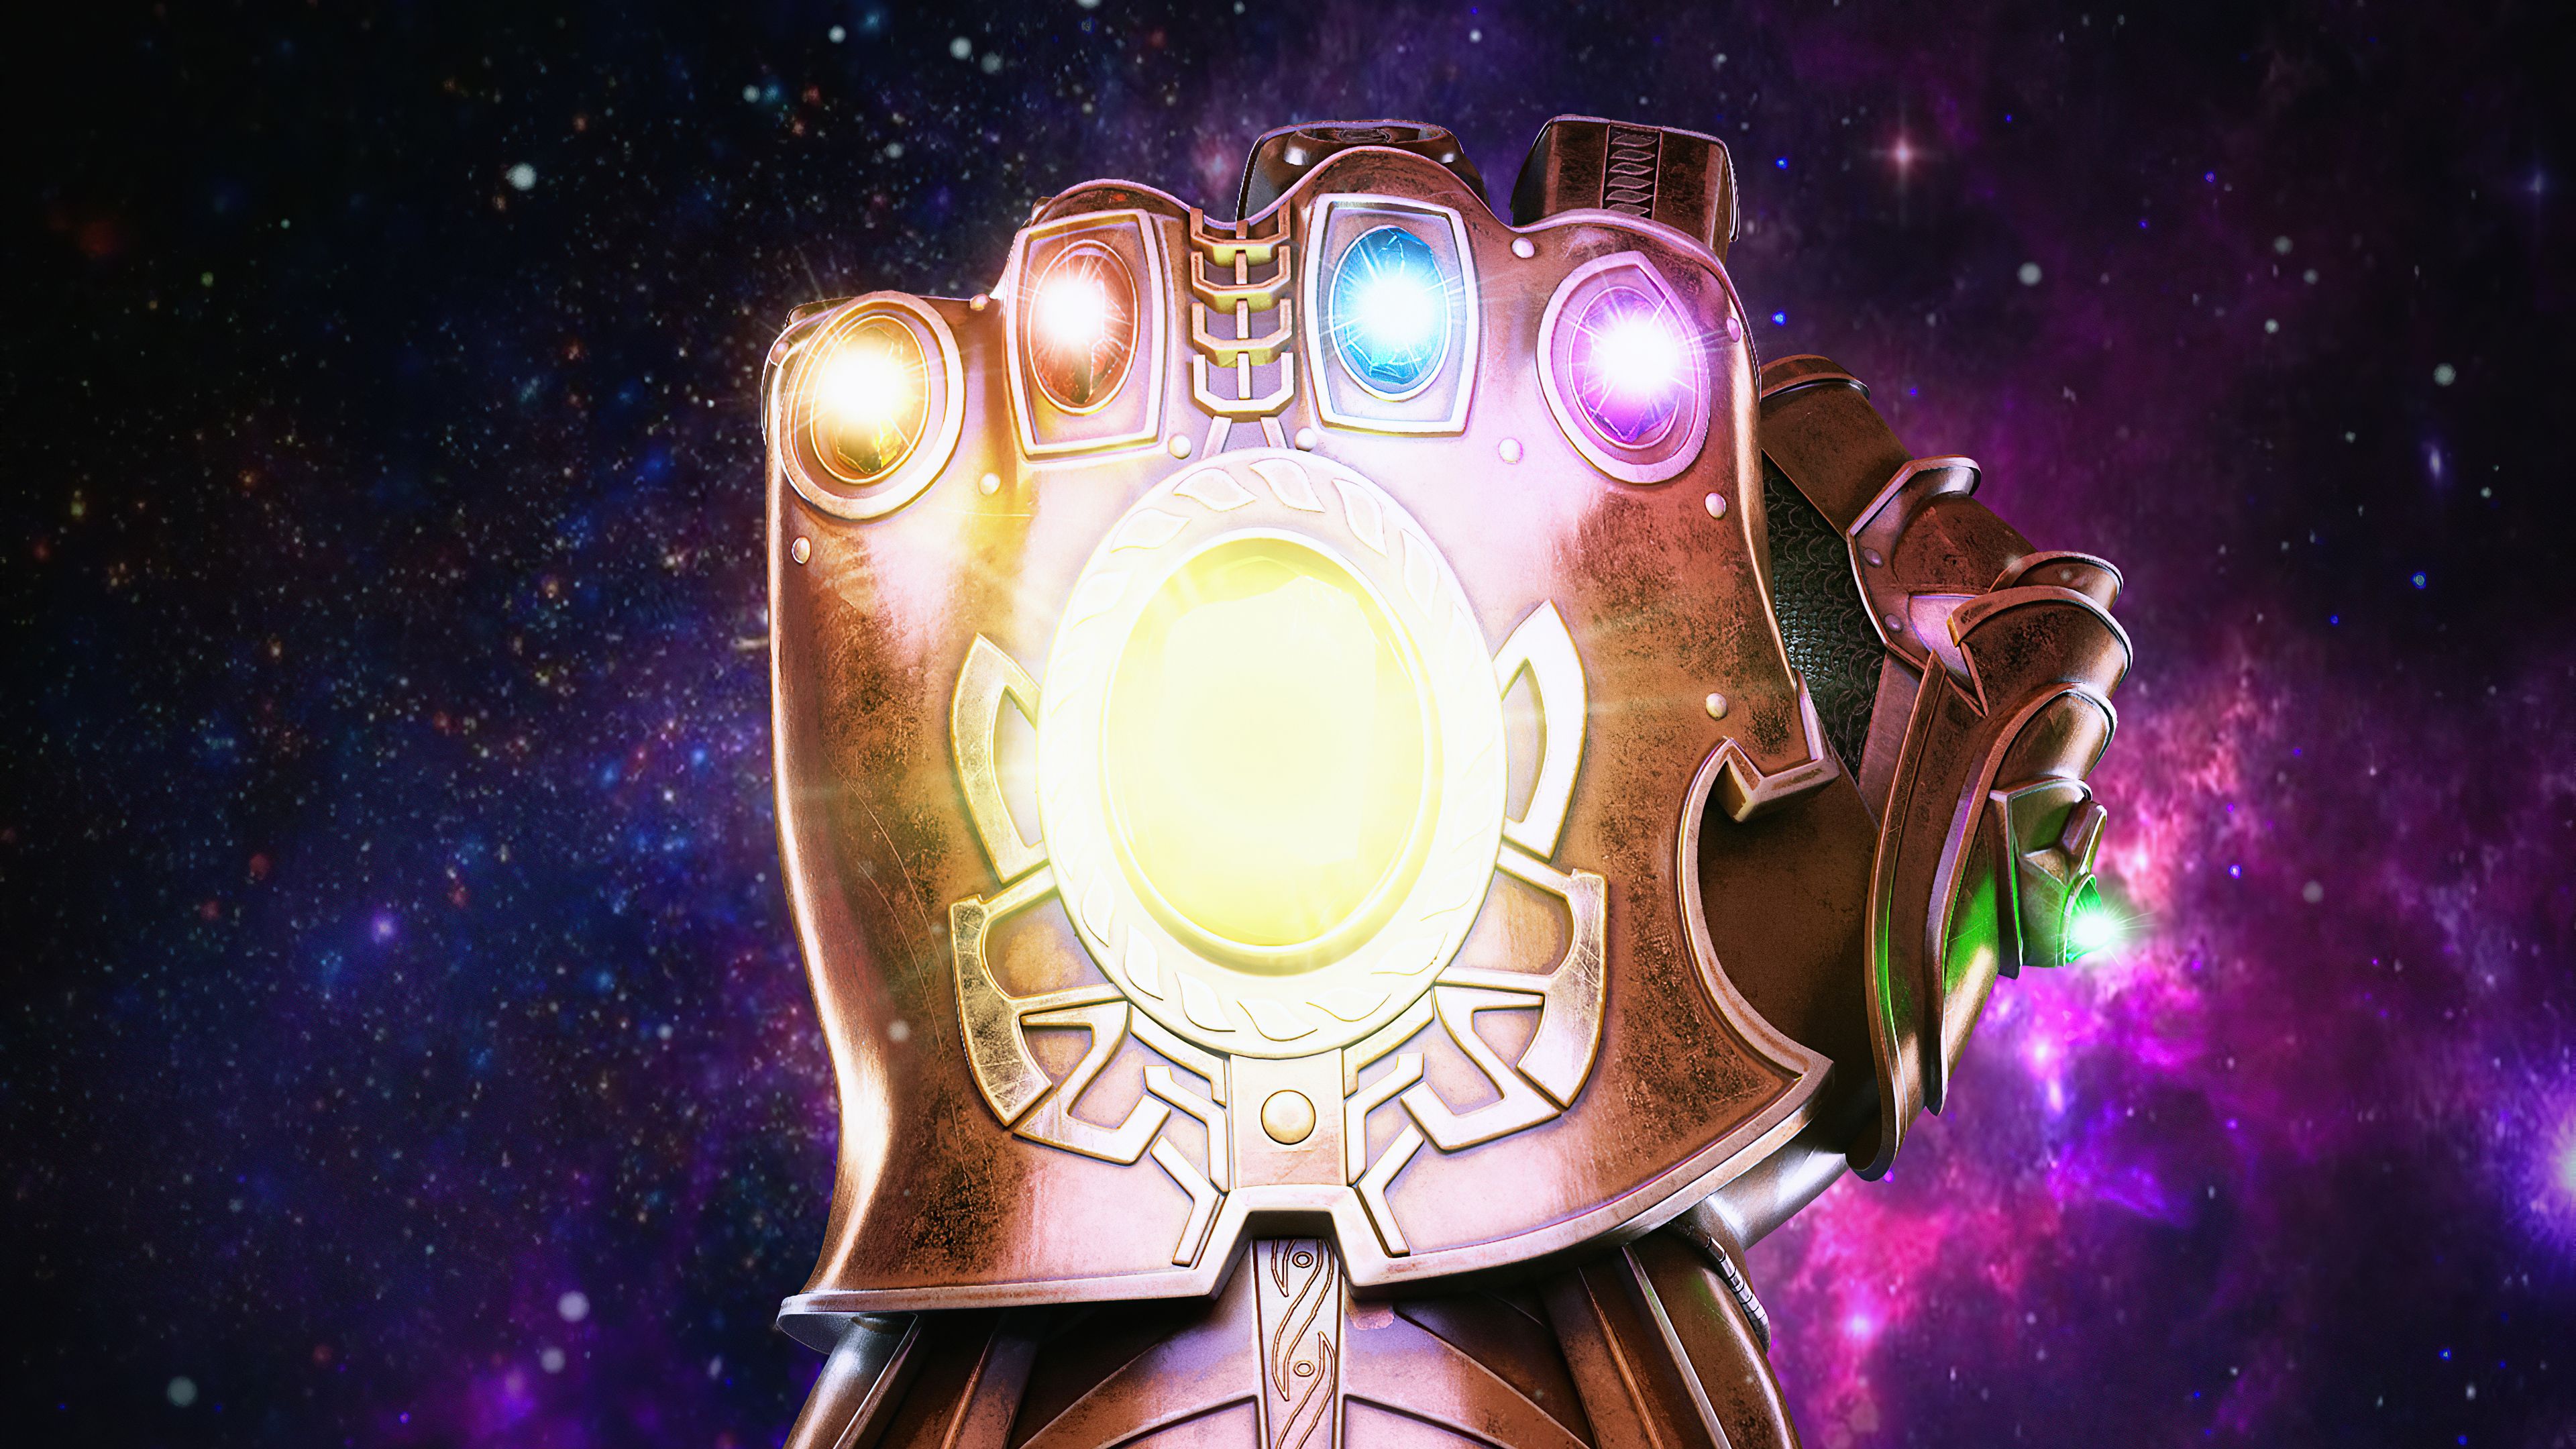 Thanos Infinity Gauntlet 4k 2020, HD Superheroes, 4k Wallpapers, Image, Bac...